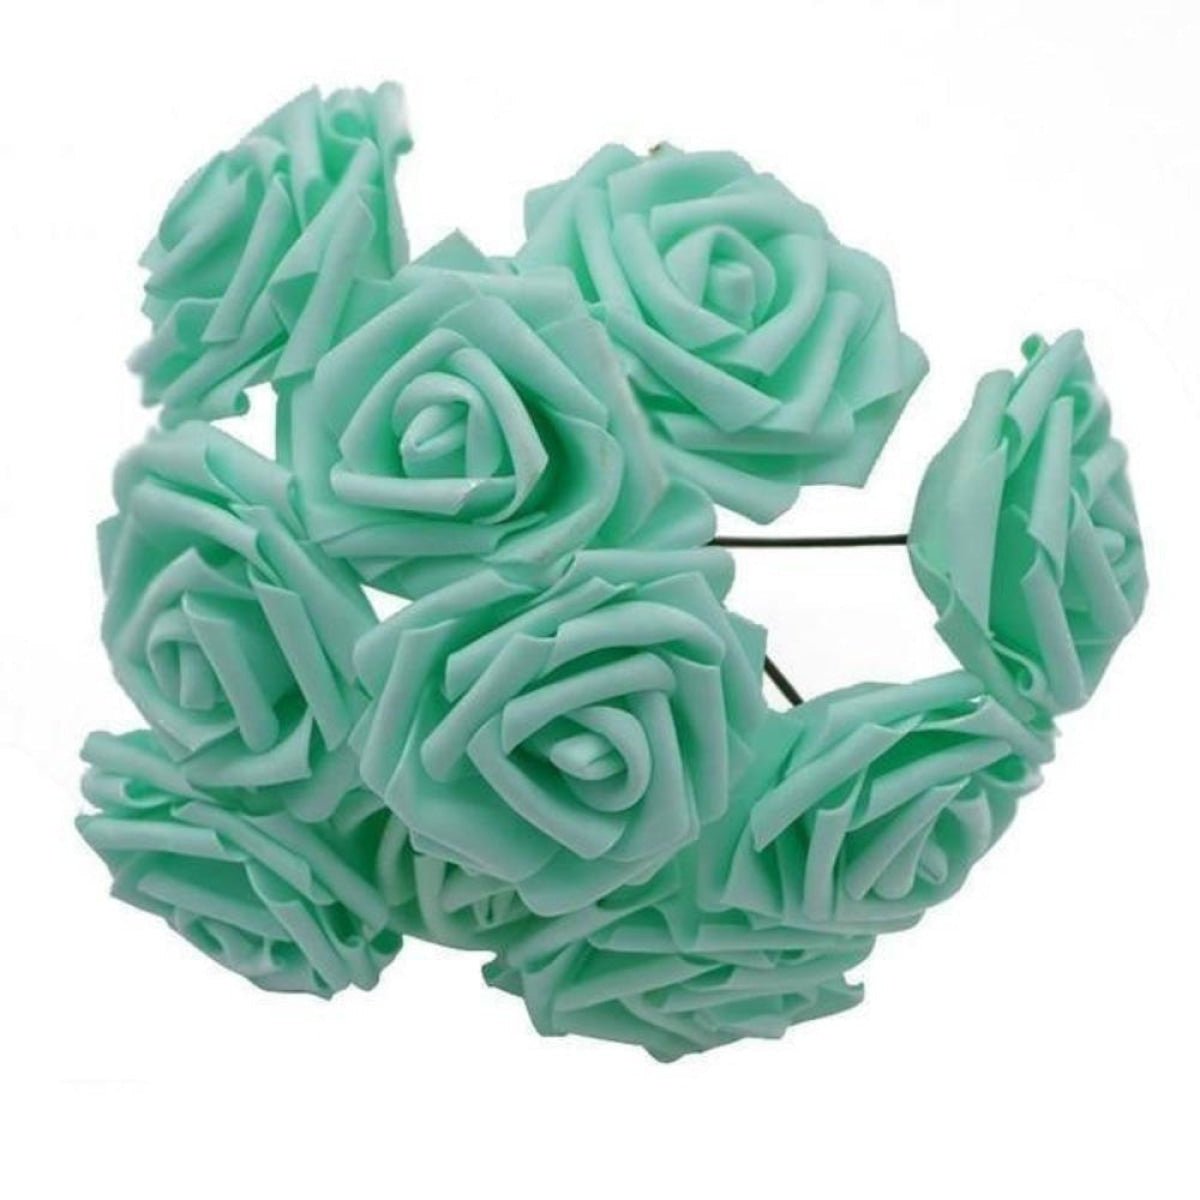 20pcs 8cm Artificial Flowers Foam Rose Fake Bride Bouquet Wedding - Mint Green - - Asia Sell